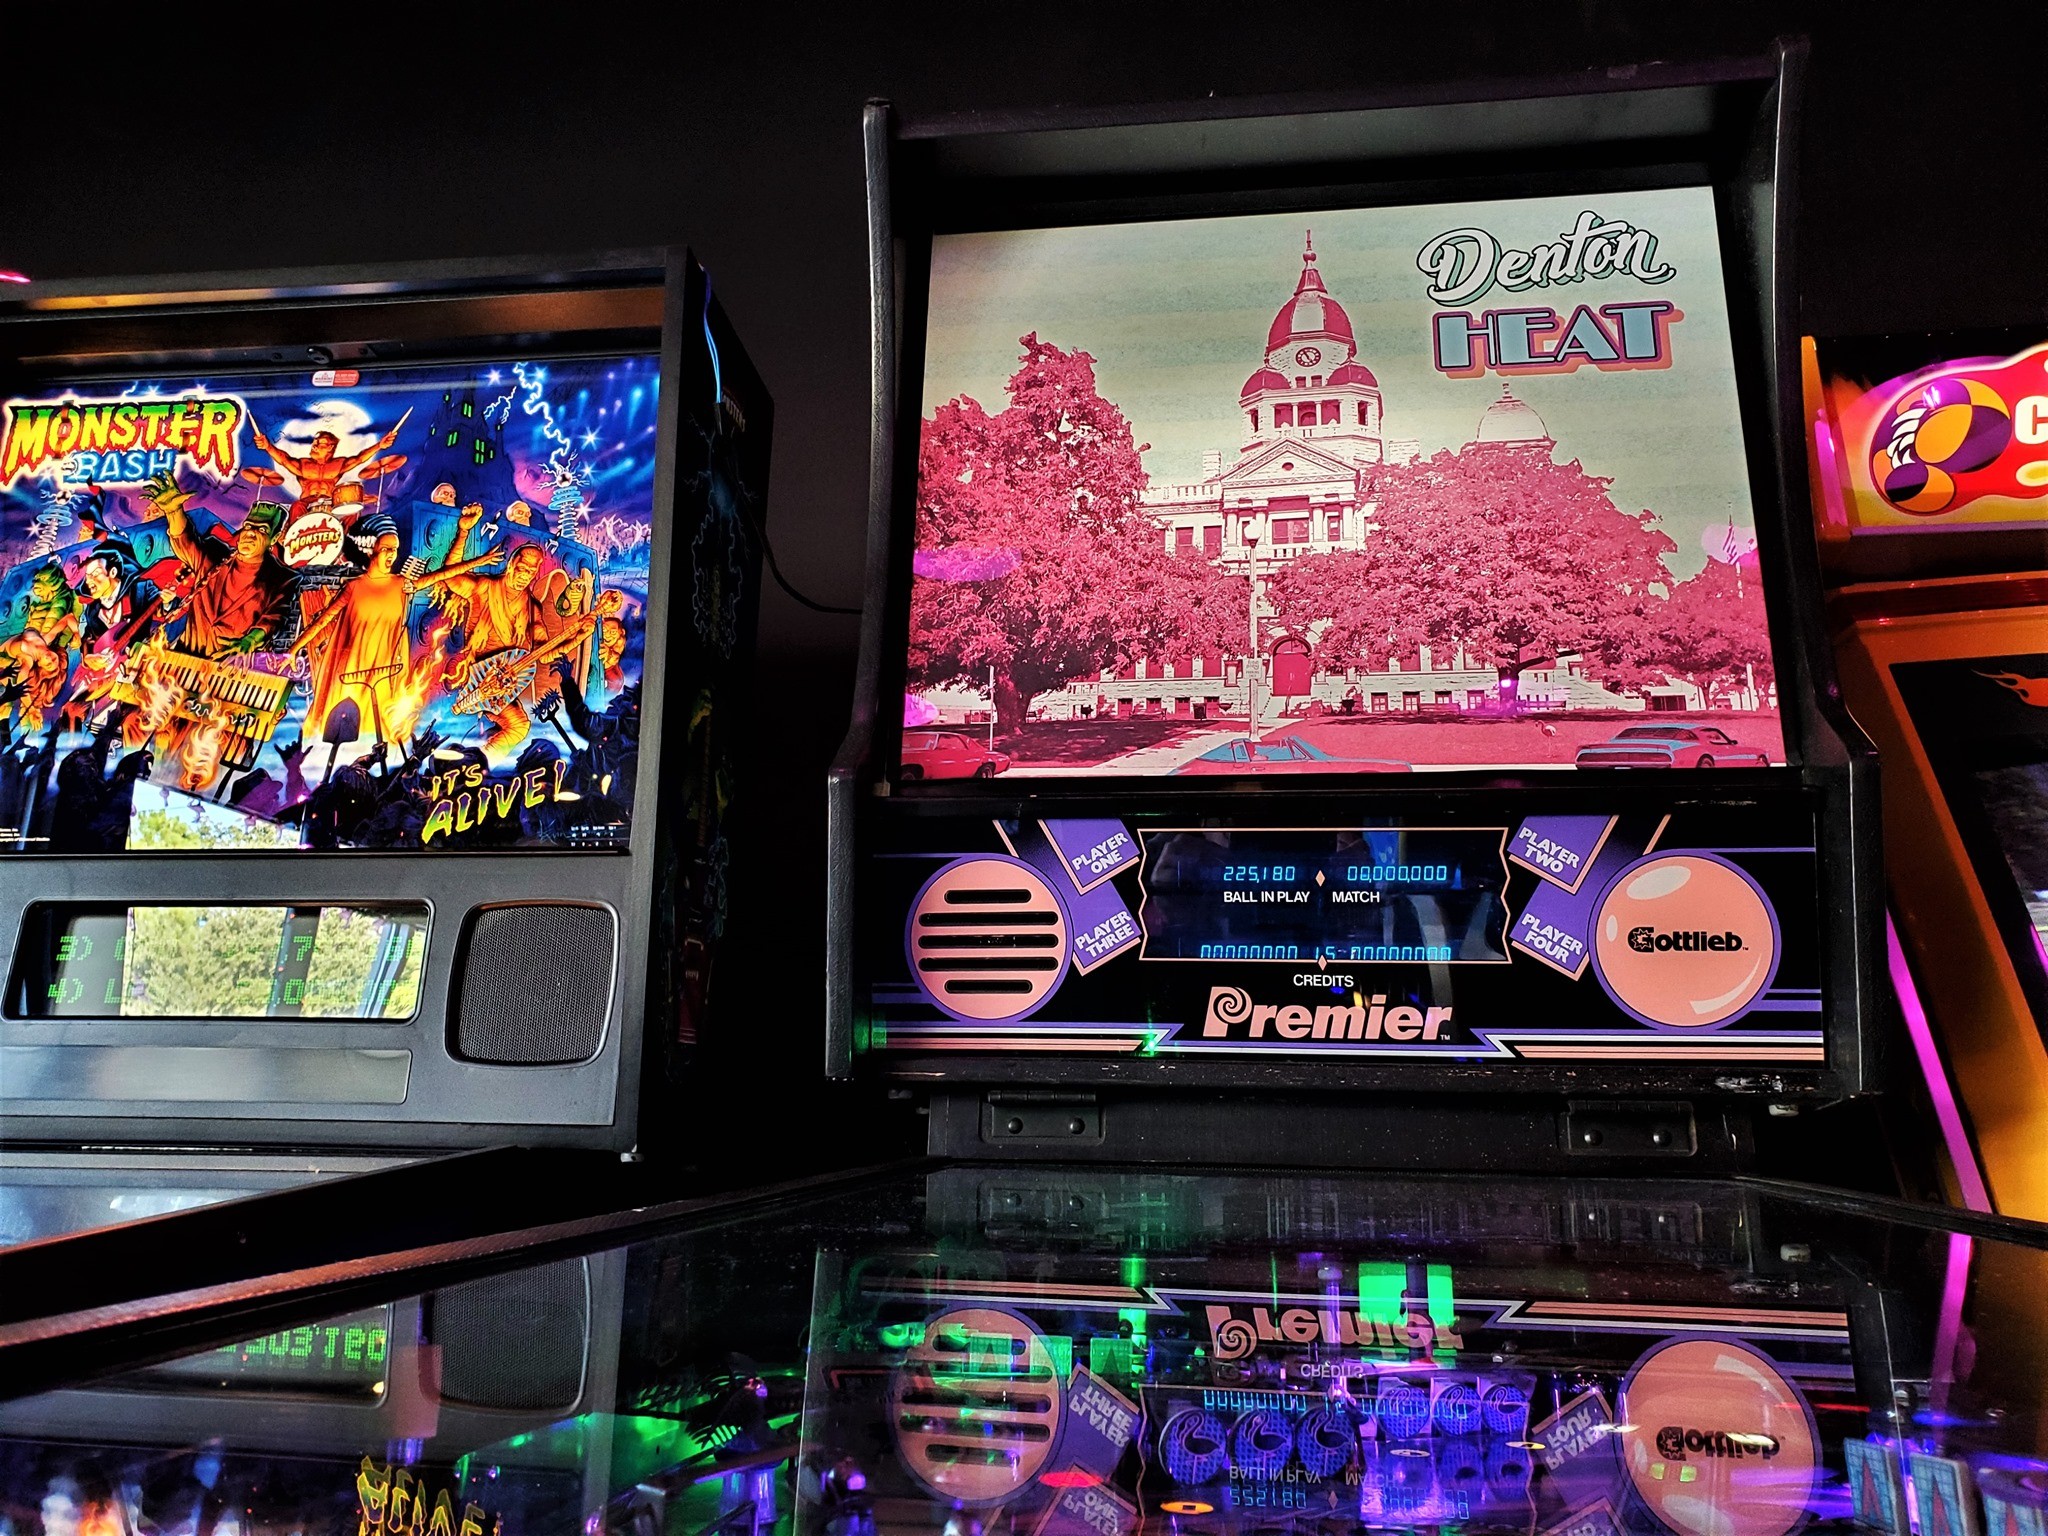 Free Play Arcade (@freeplayarcade) • Instagram photos and videos